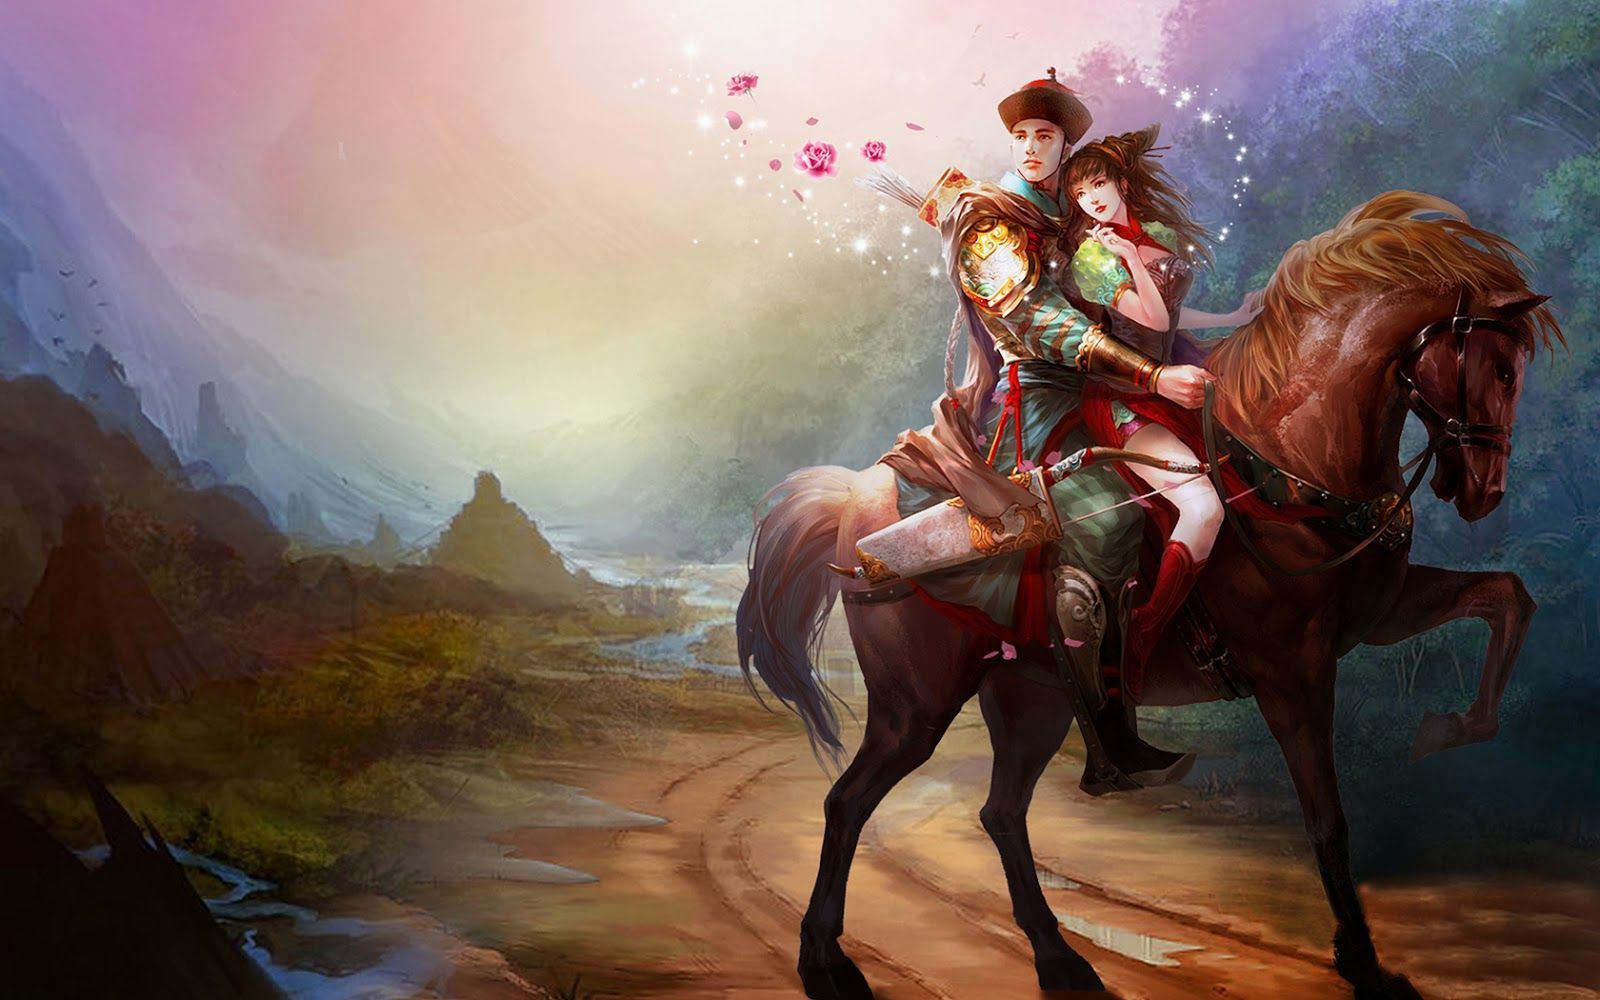 Romantic Lovers Paintings Digital Art CG Pictures Free Download ...